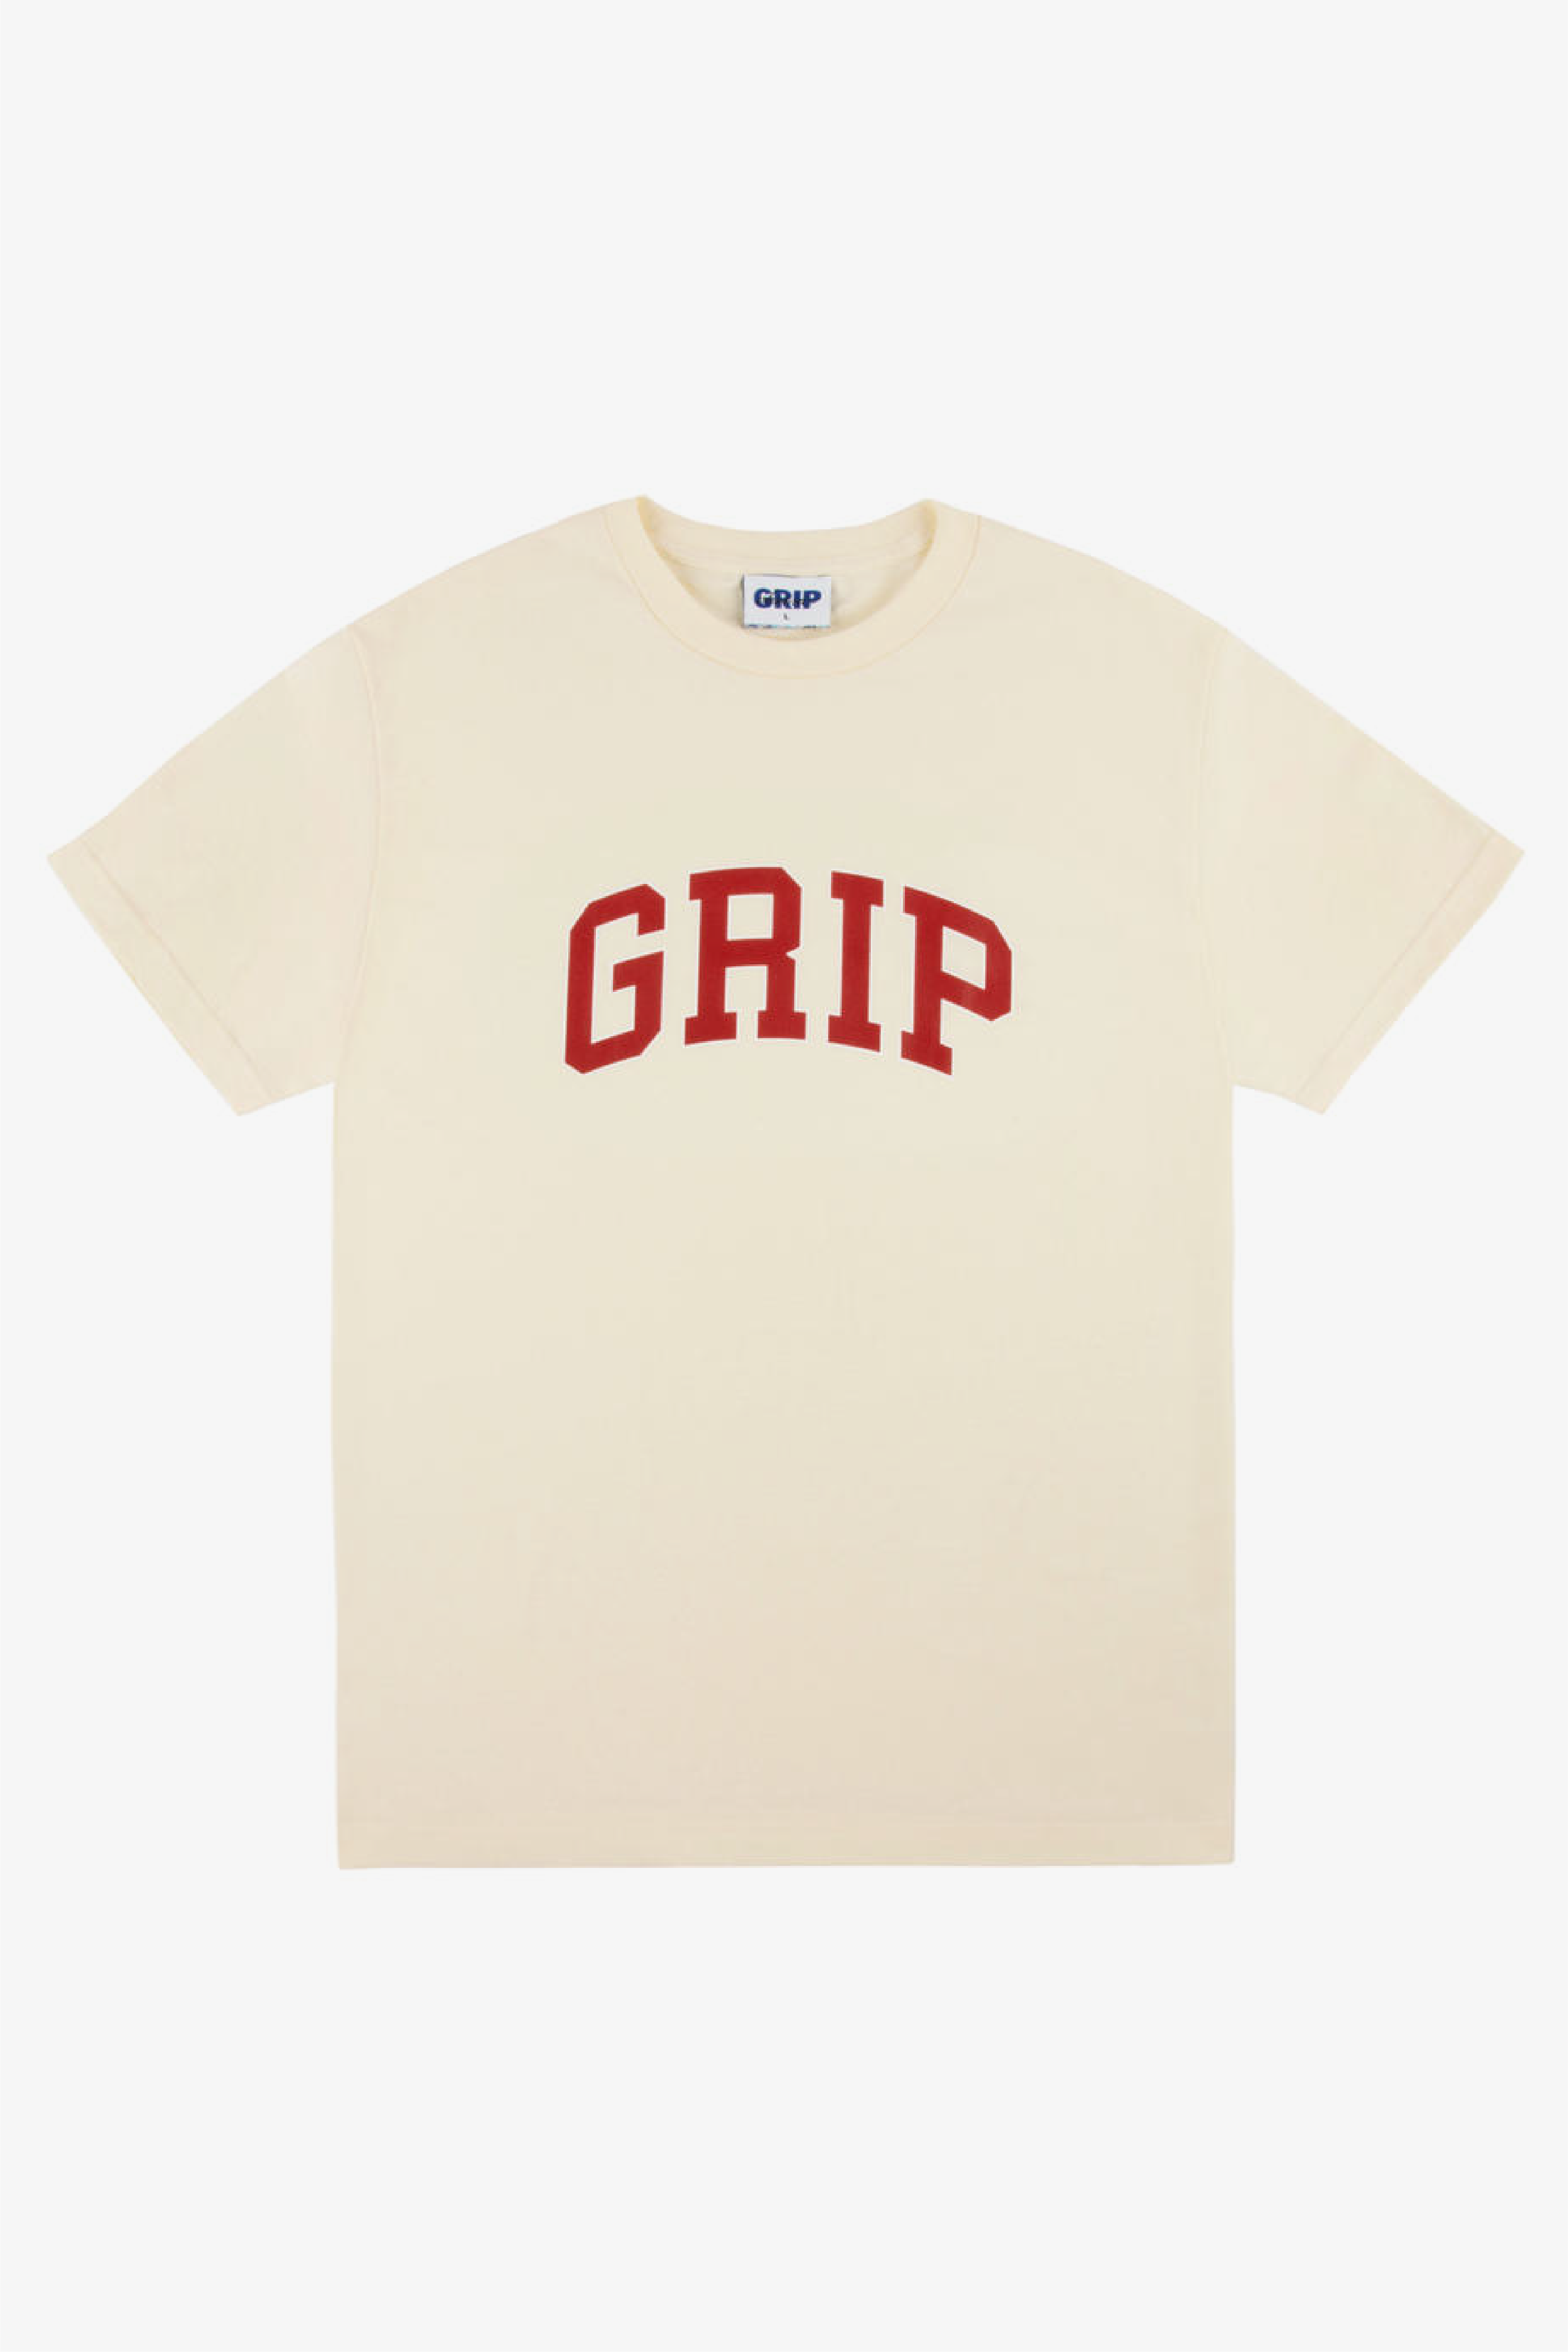 Selectshop FRAME - CLASSIC Grip Tee T-Shirts Dubai